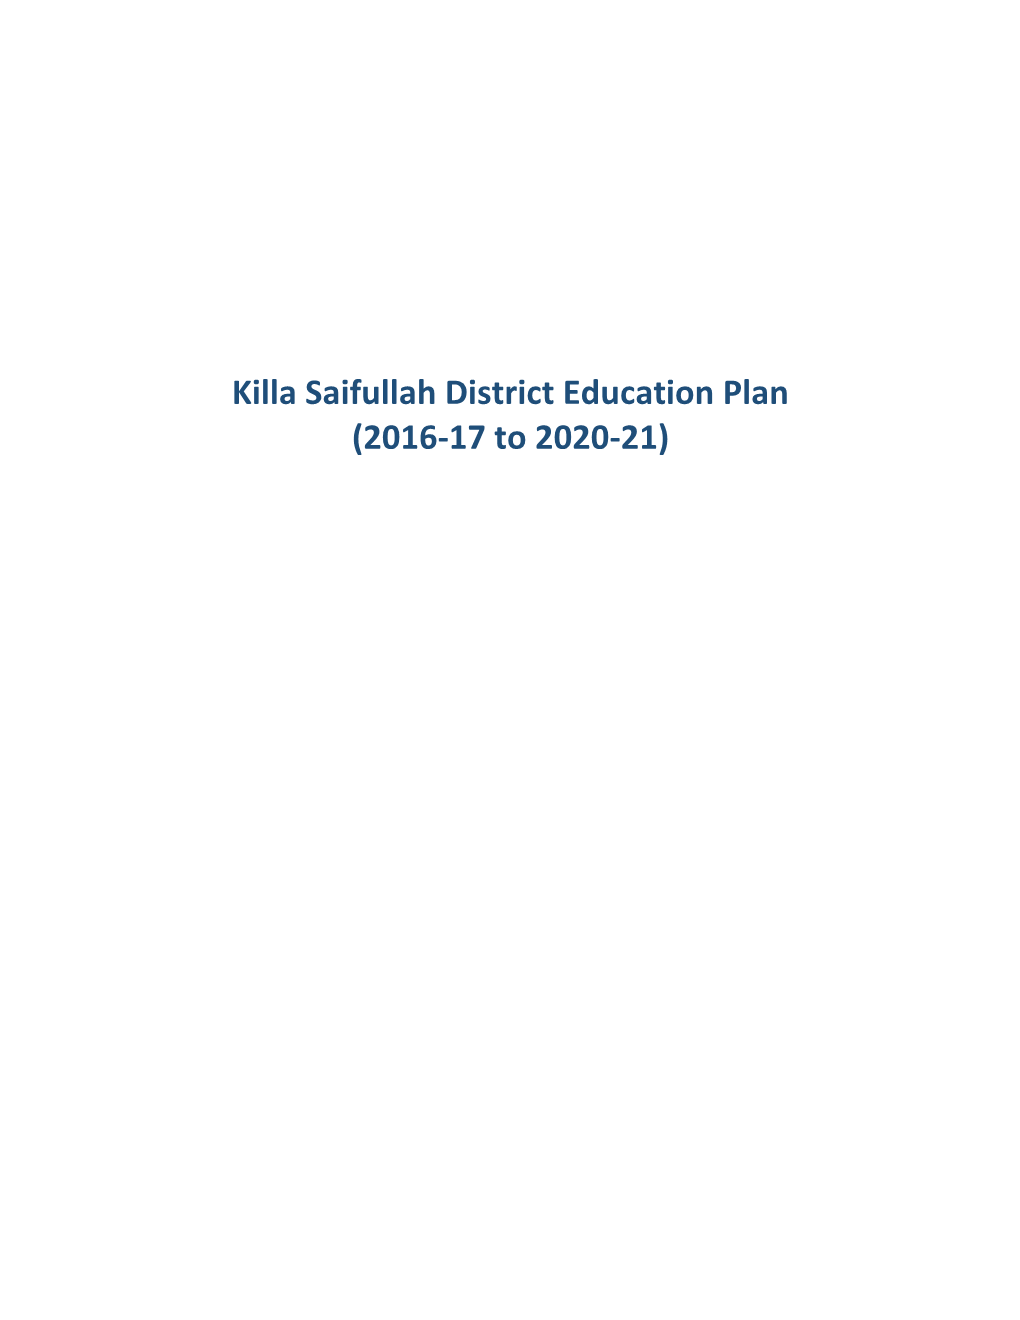 Killa Saifullah District Education Plan (2016-17 to 2020-21)